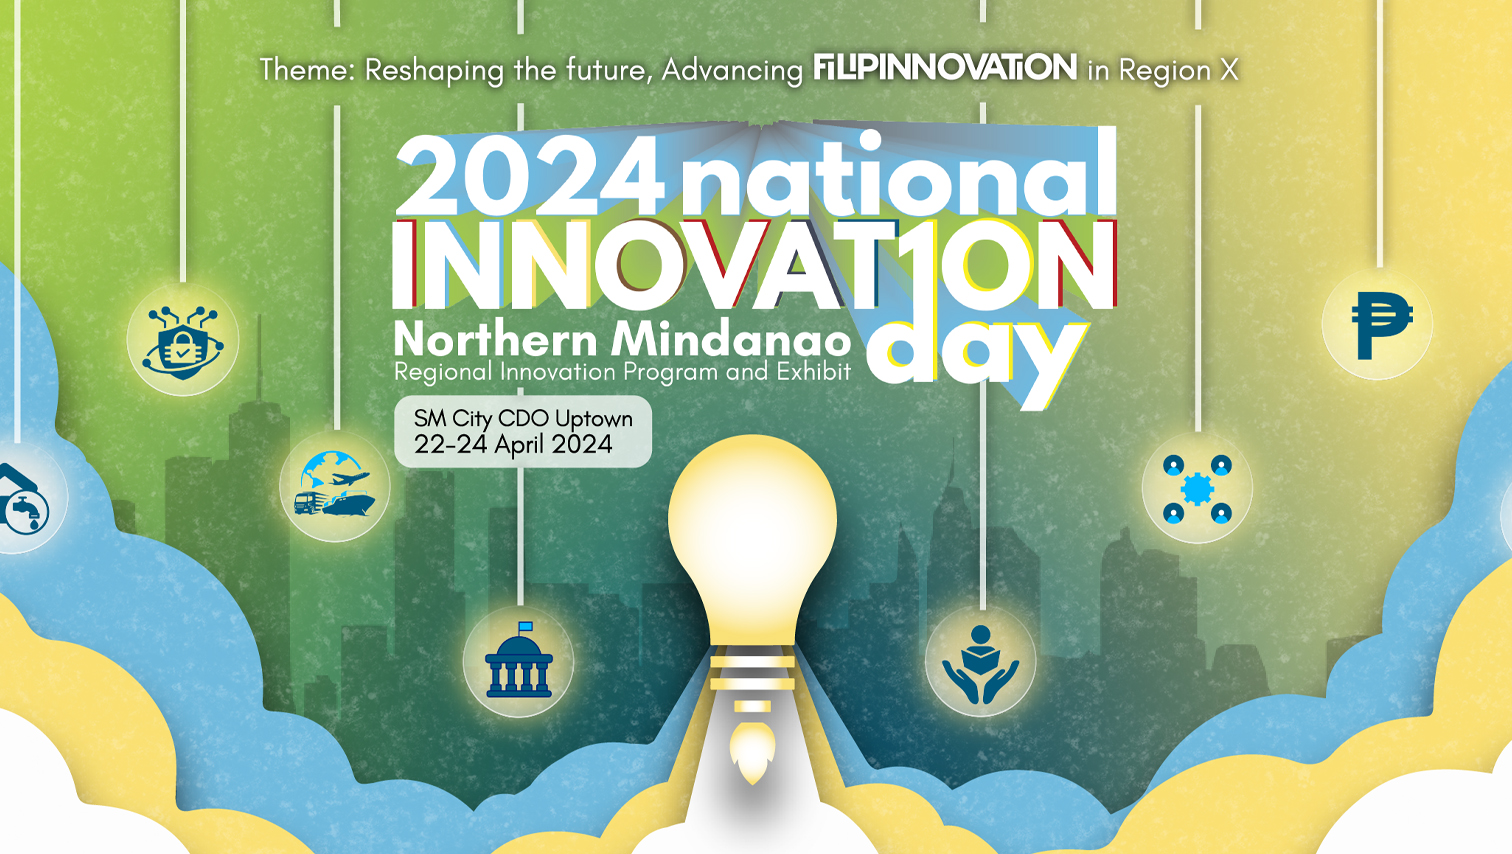 EVENT WATCH: Regional Innovation Program and Exhibit set April 22-24 at SM City CDO Uptown